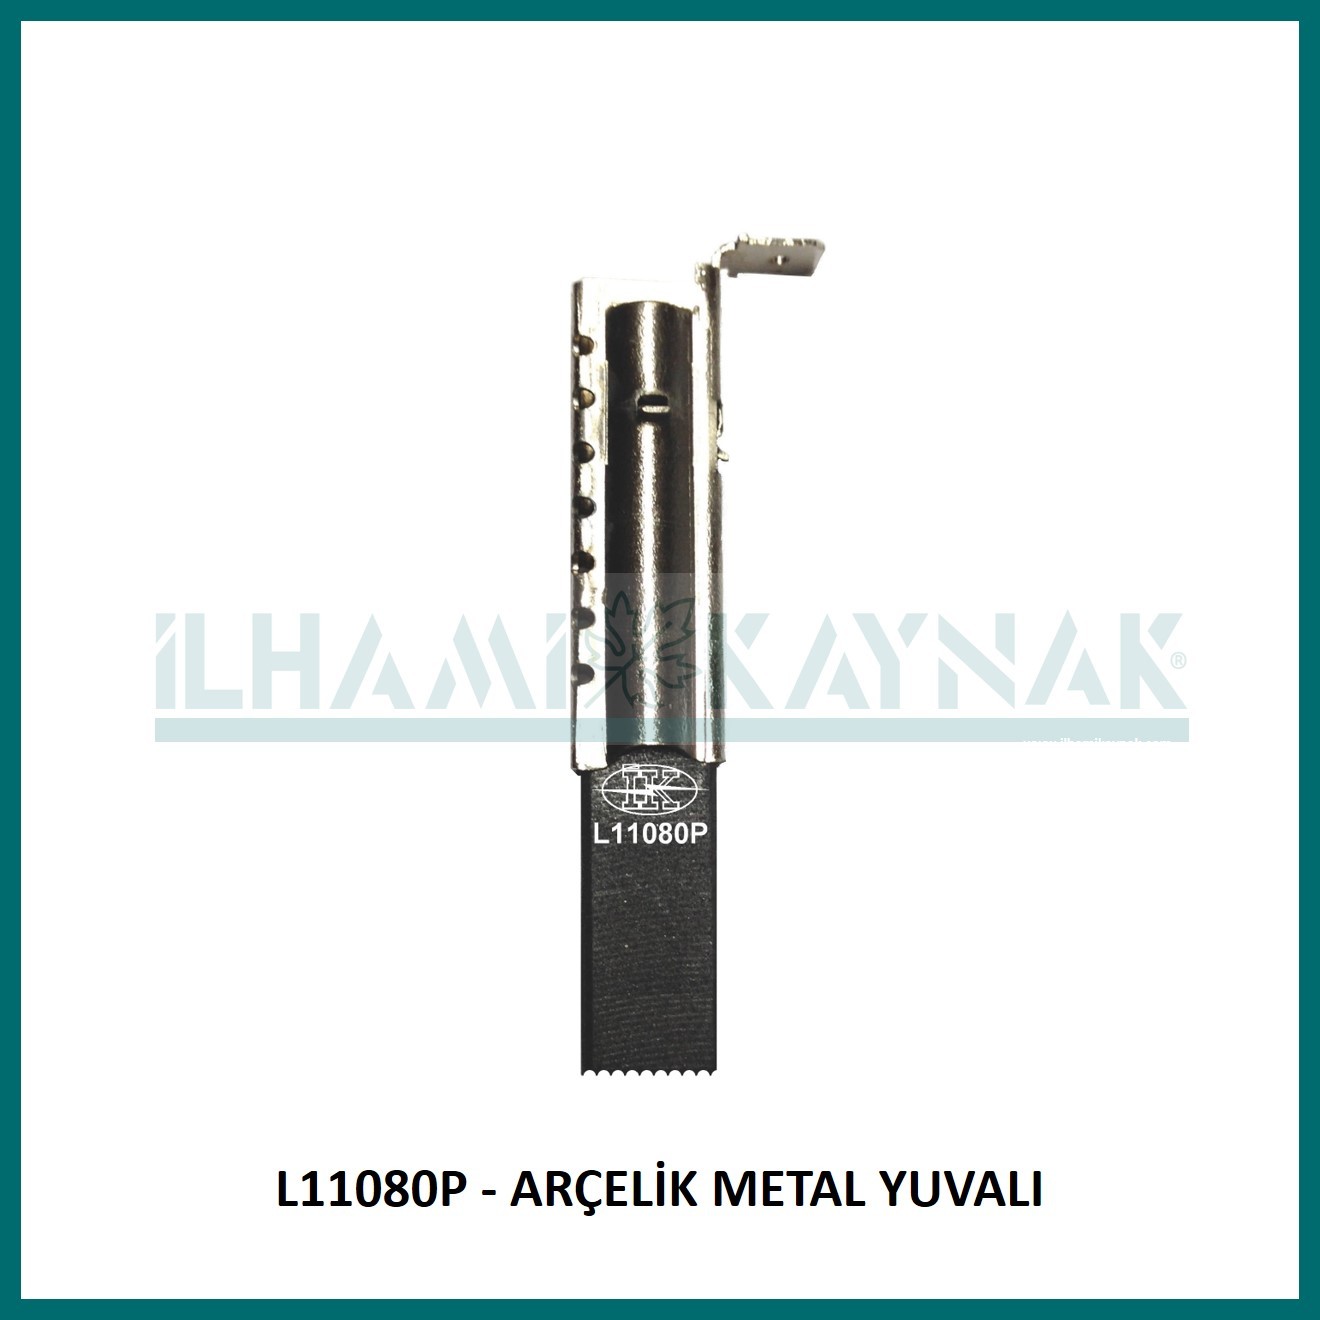 L11080P - ARÇELİK METAL YUVALI -  5*12.5*32 mm - 50 Adet